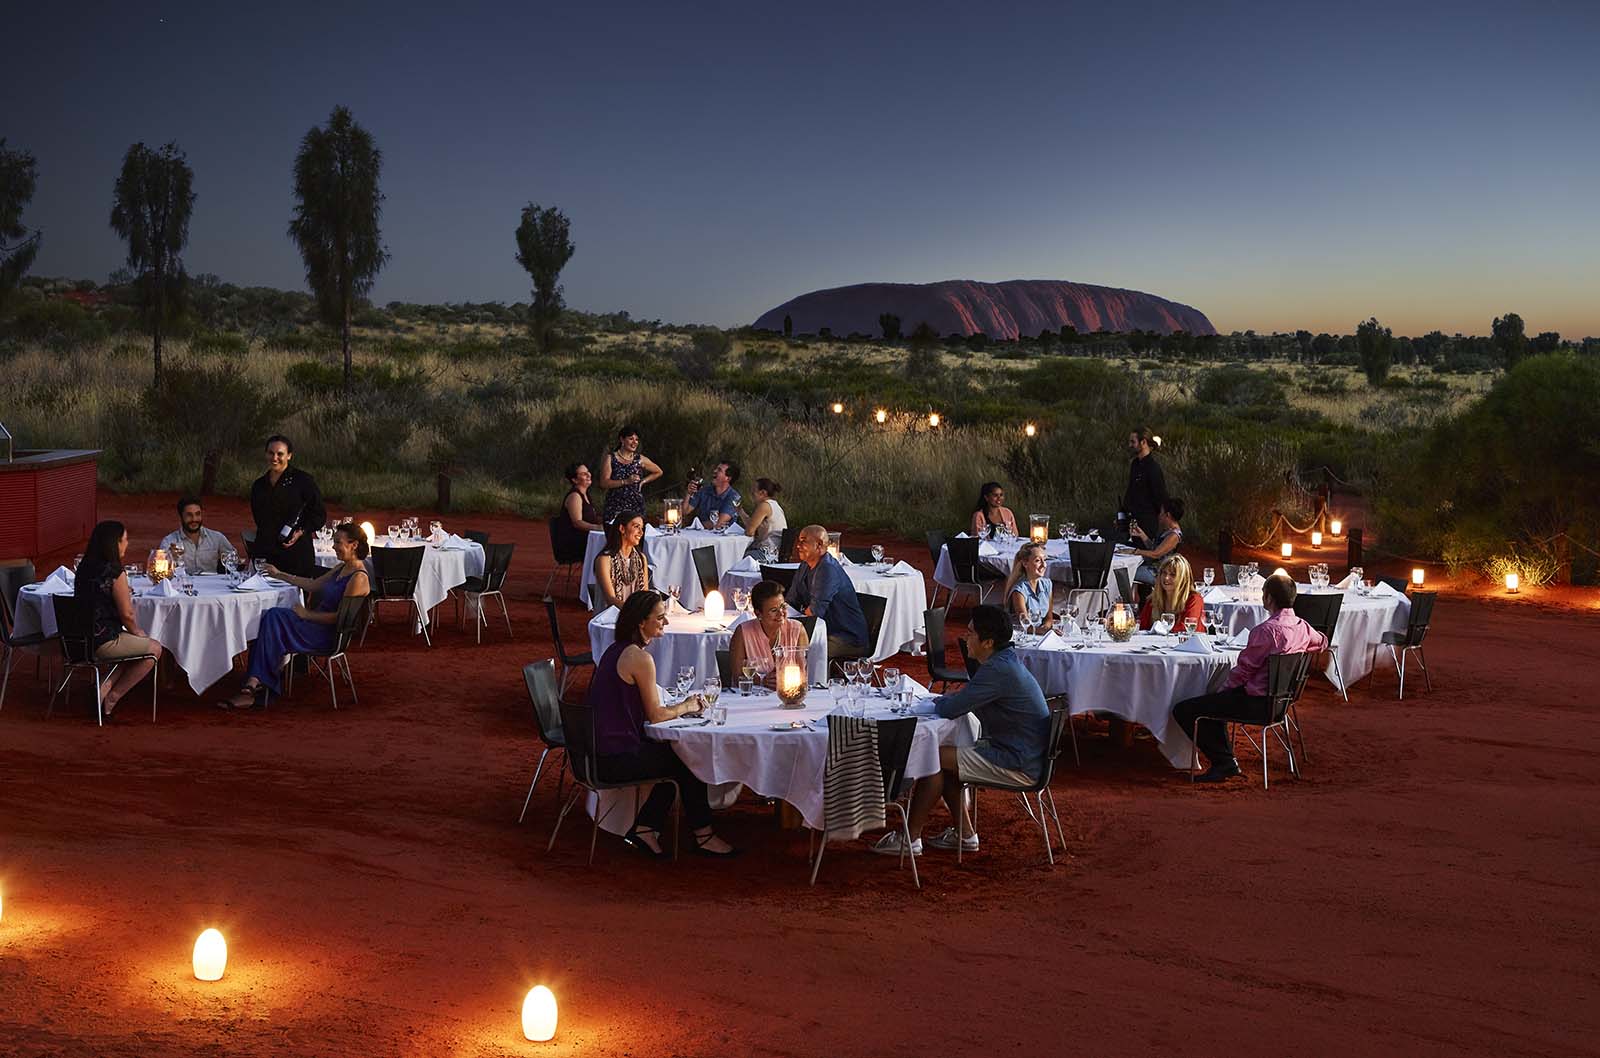 Sounds of Silence dinner, Uluru | Food getaways to take this year